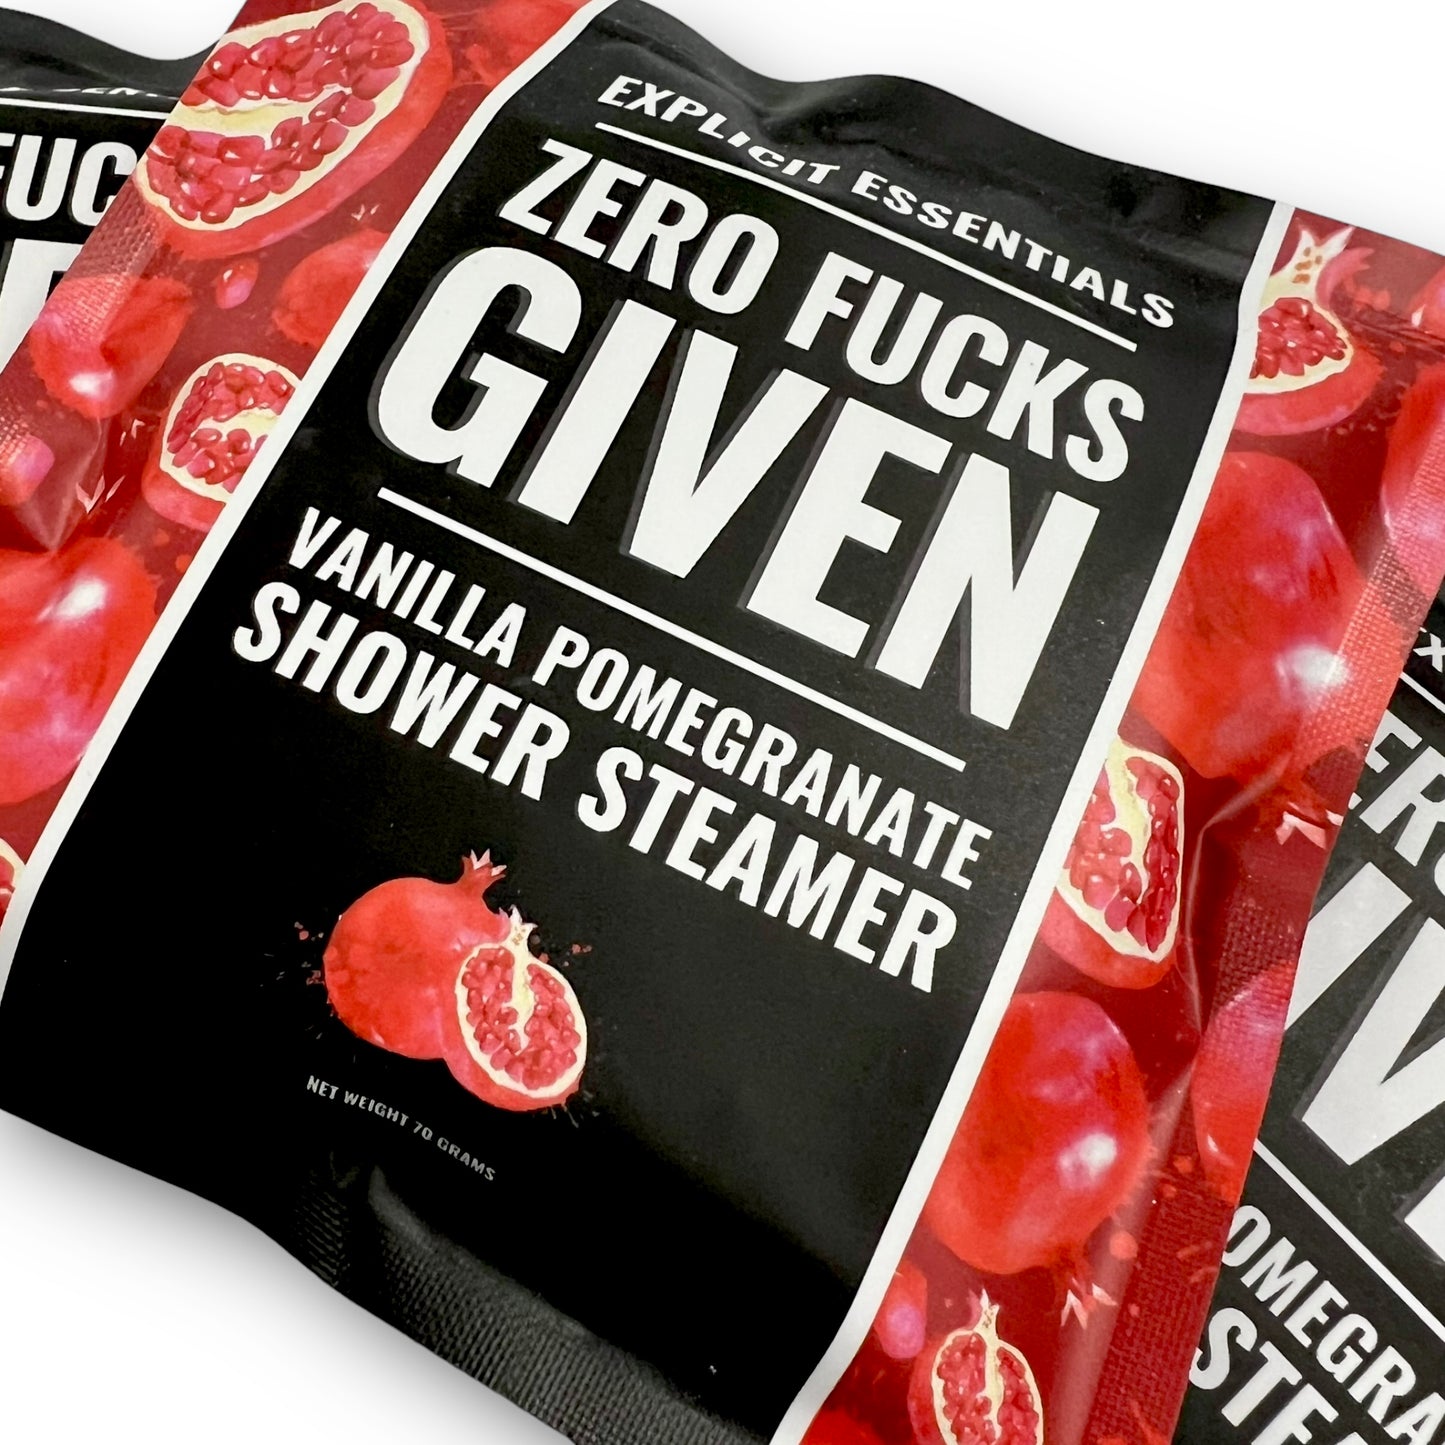 Zero Fucks Given Shower Puck